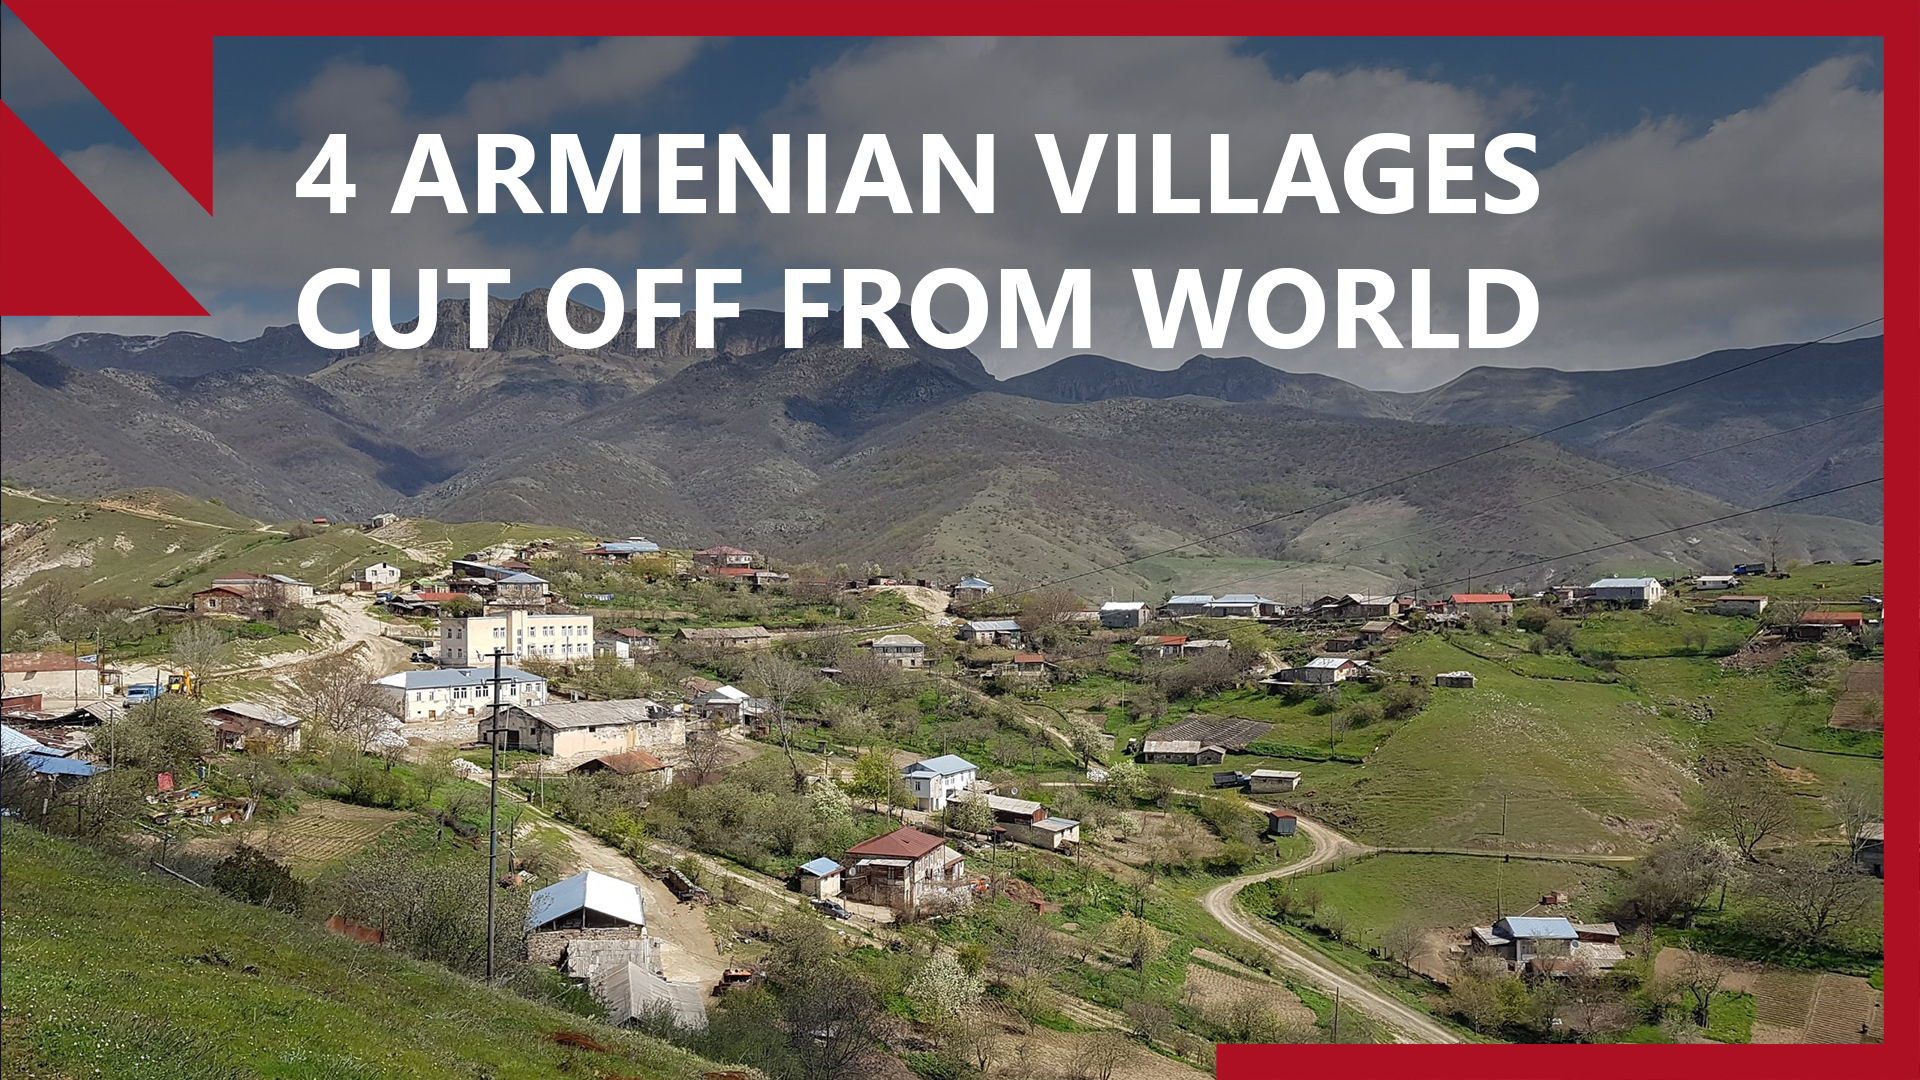 Villages in Artsakh face a ‘double blockade’